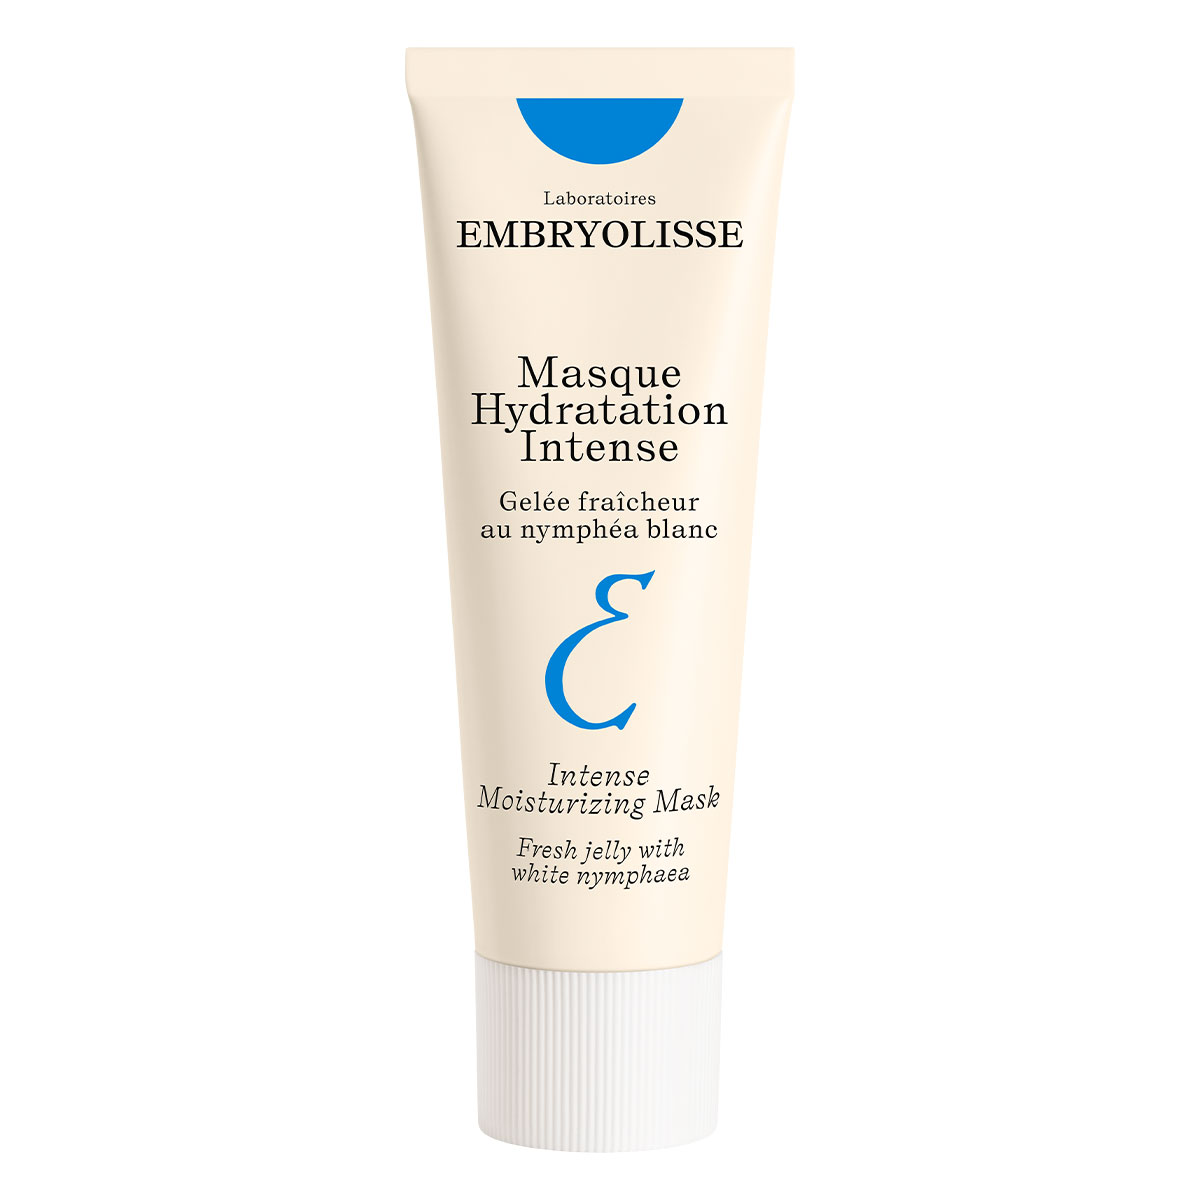 Masque hydratation intense Embryolisse - tube de 40 ml